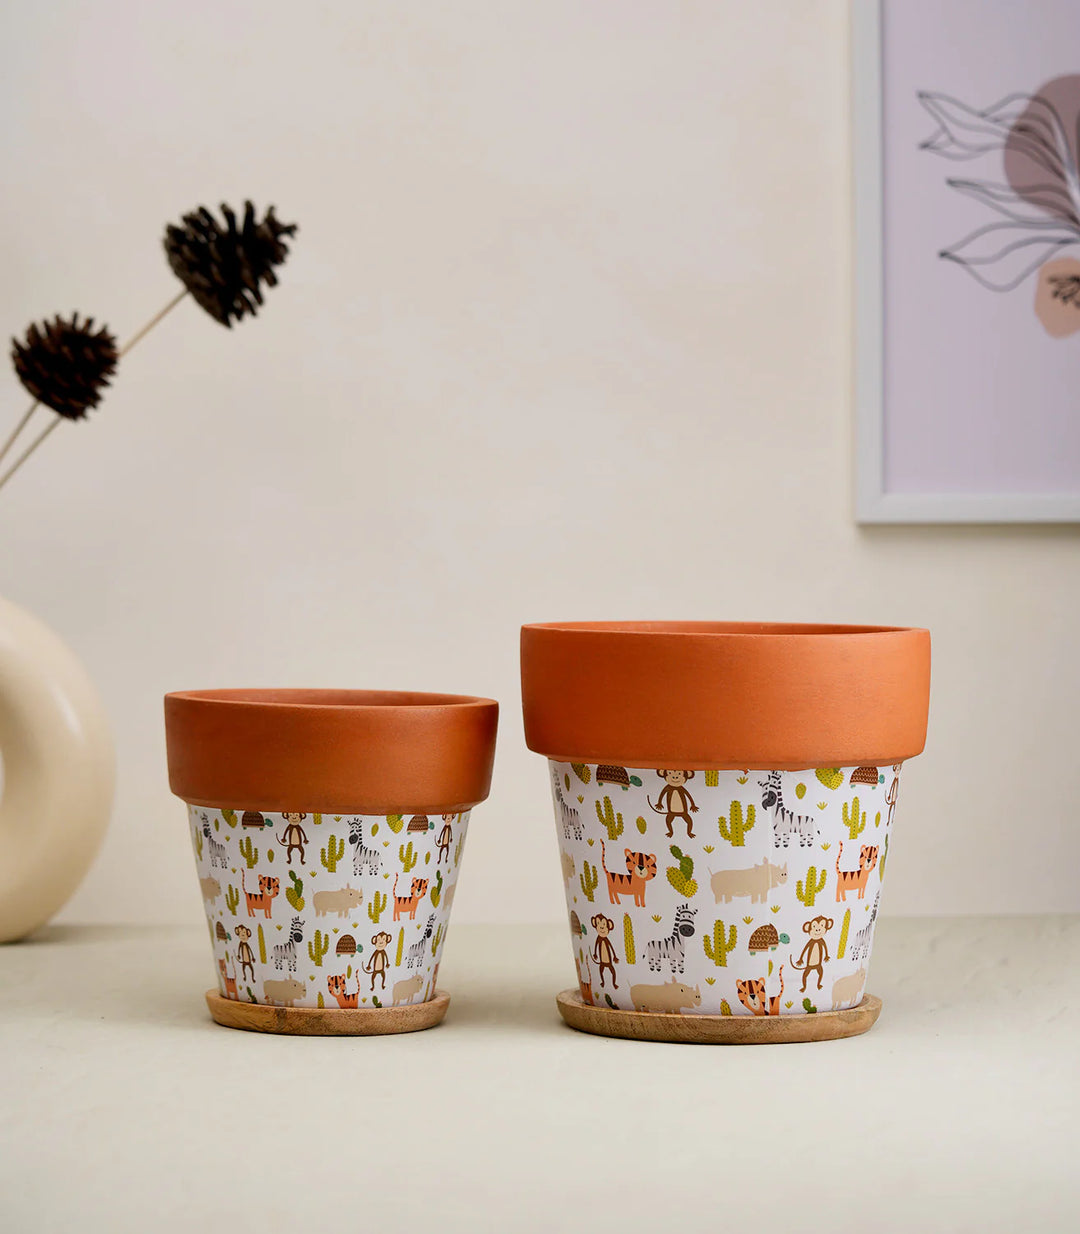 Terracotta Plant Pots Combo with Wooden Tray | Basica' White Terracotta Plant Pots Combo with Wooden Bottom Tray